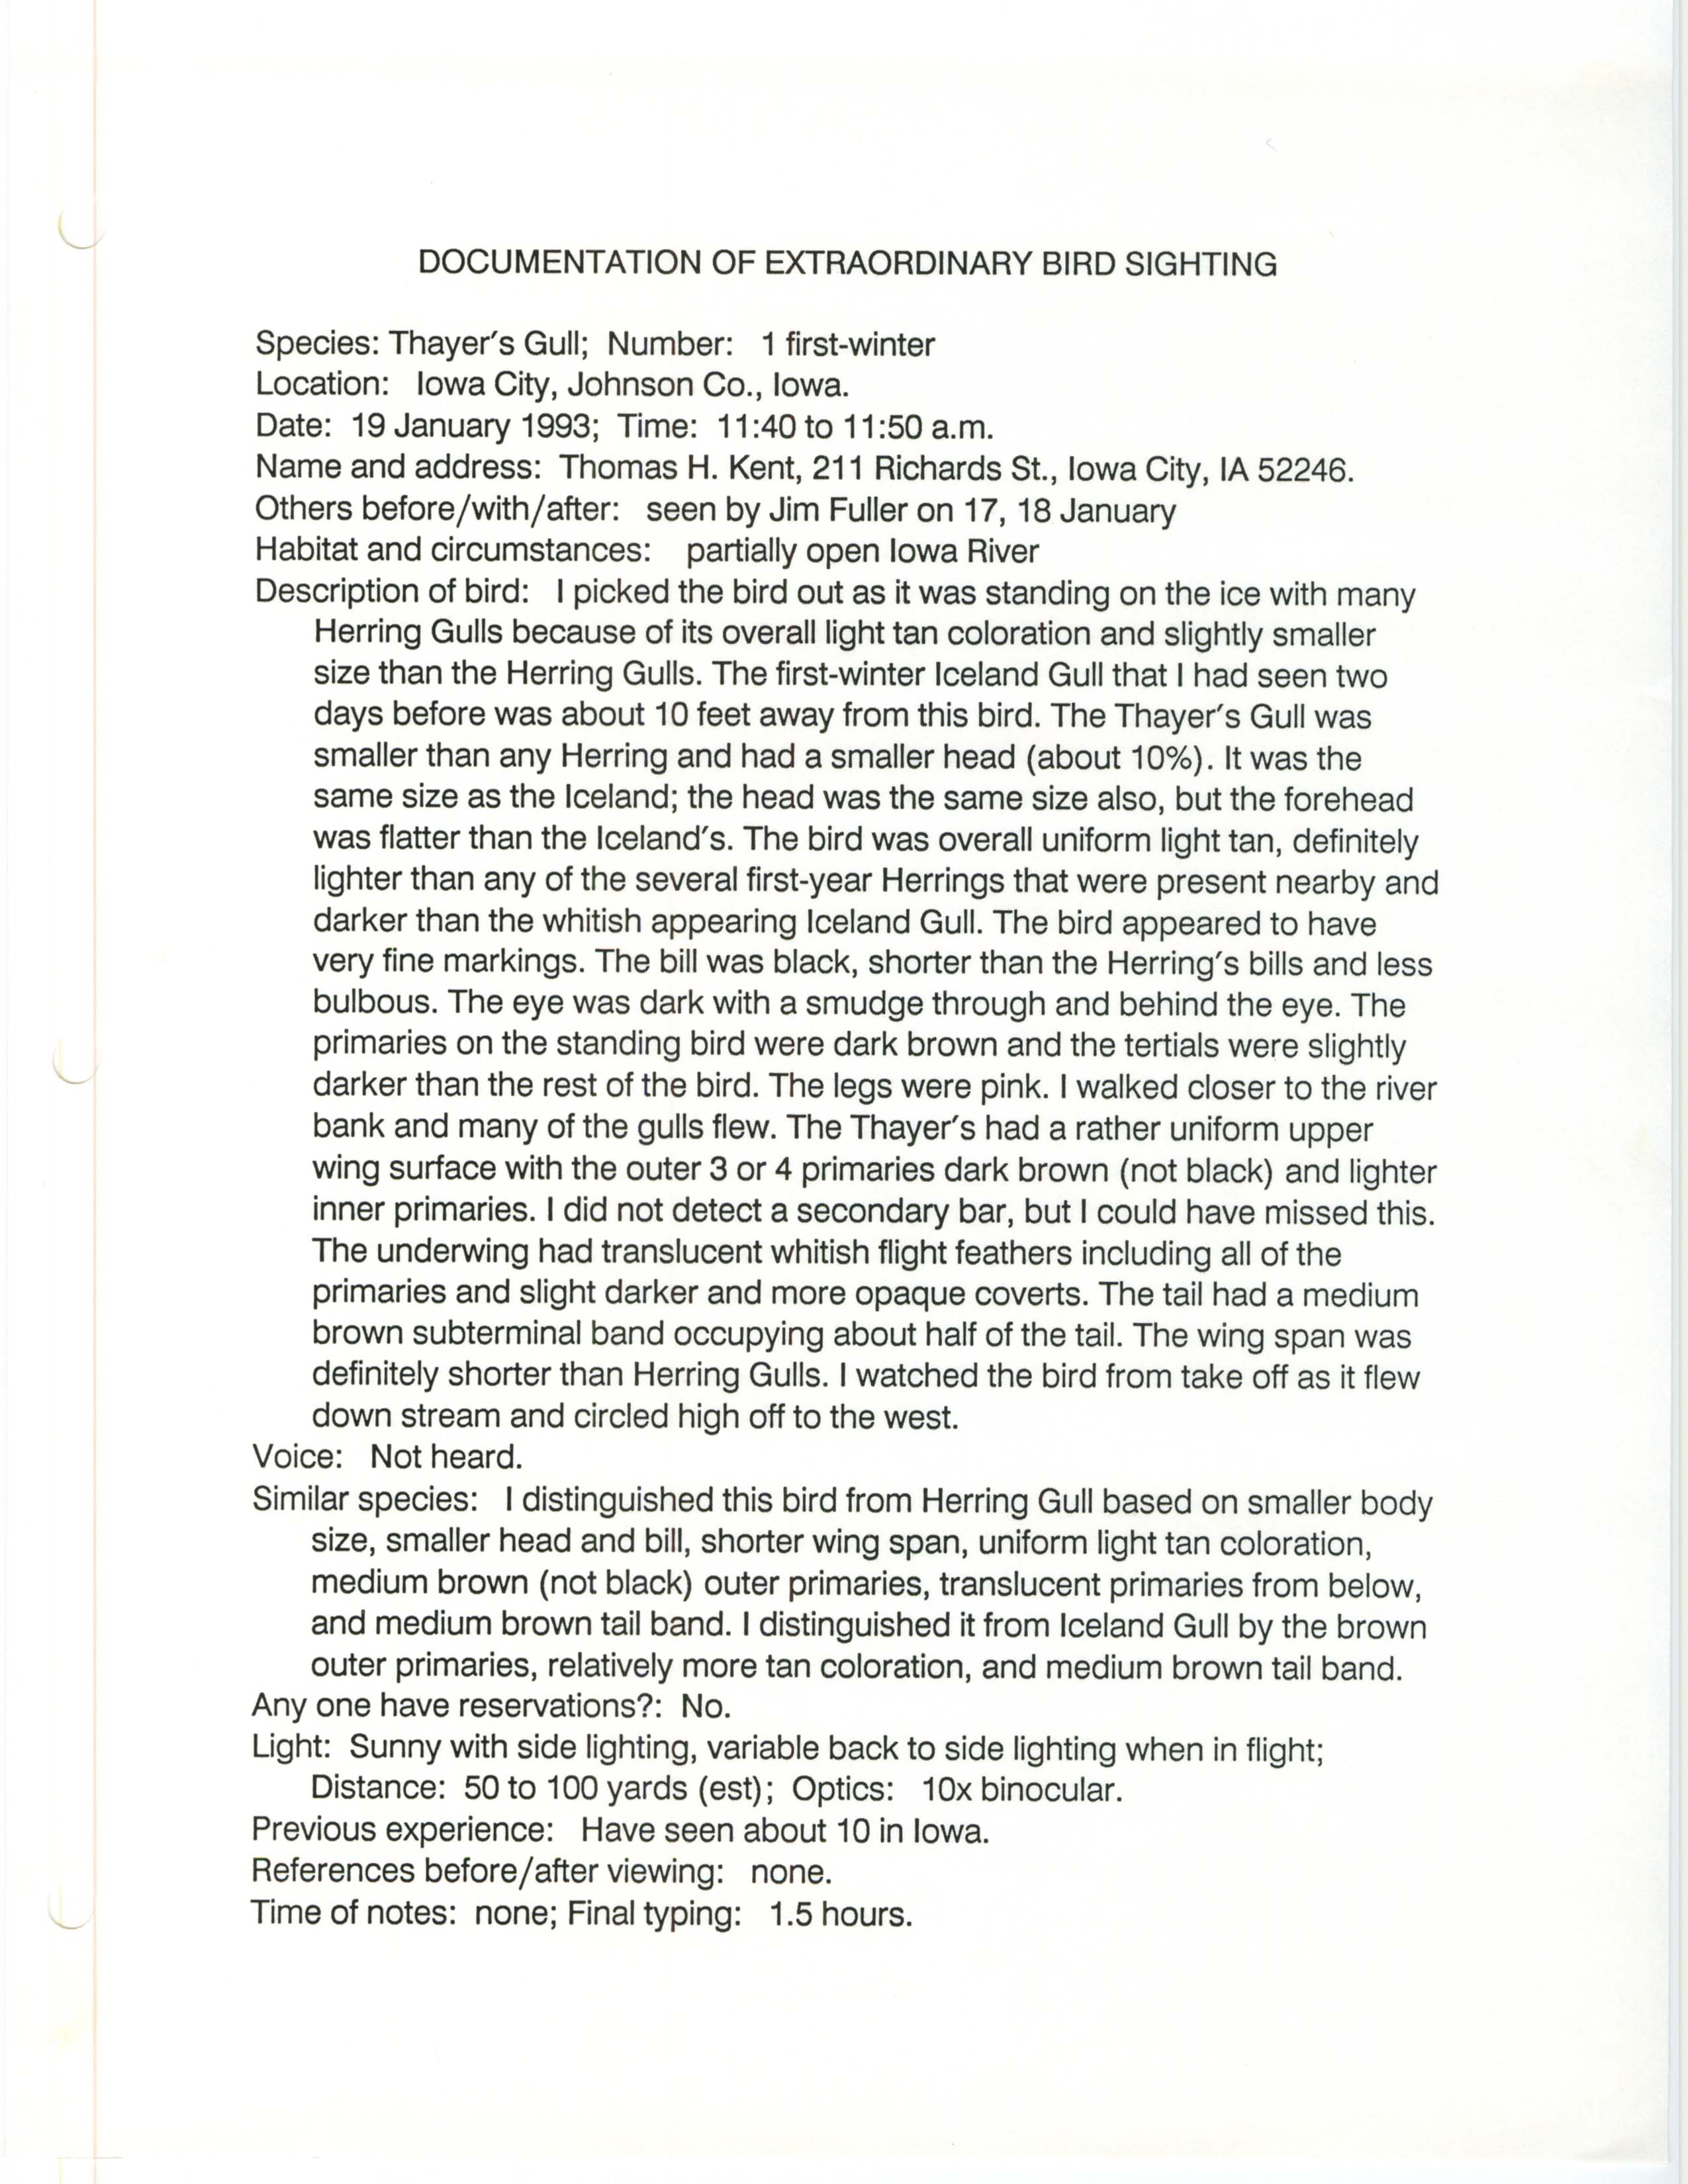 Rare bird documentation form for Thayer's Gull at Iowa City, 1993